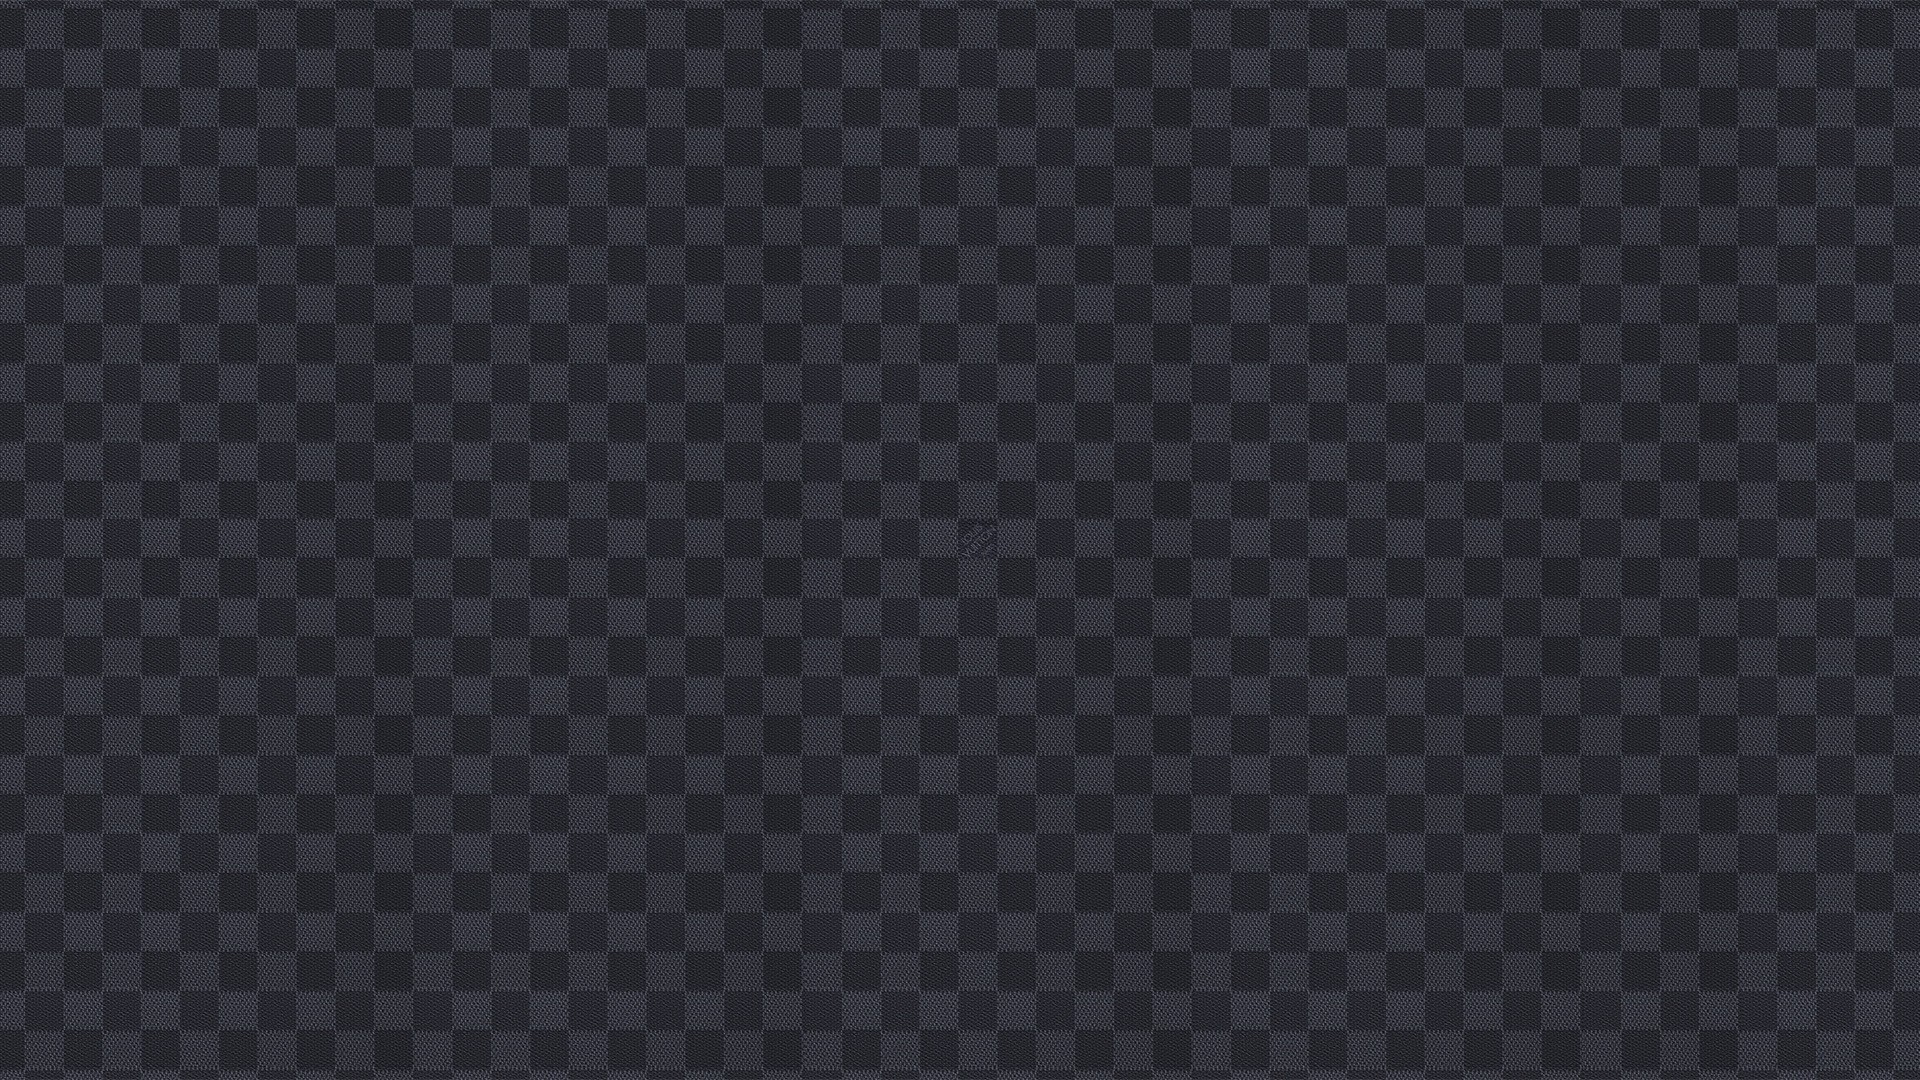 Louis Vuitton HD Wallpaper | Background Image | 1920x1080